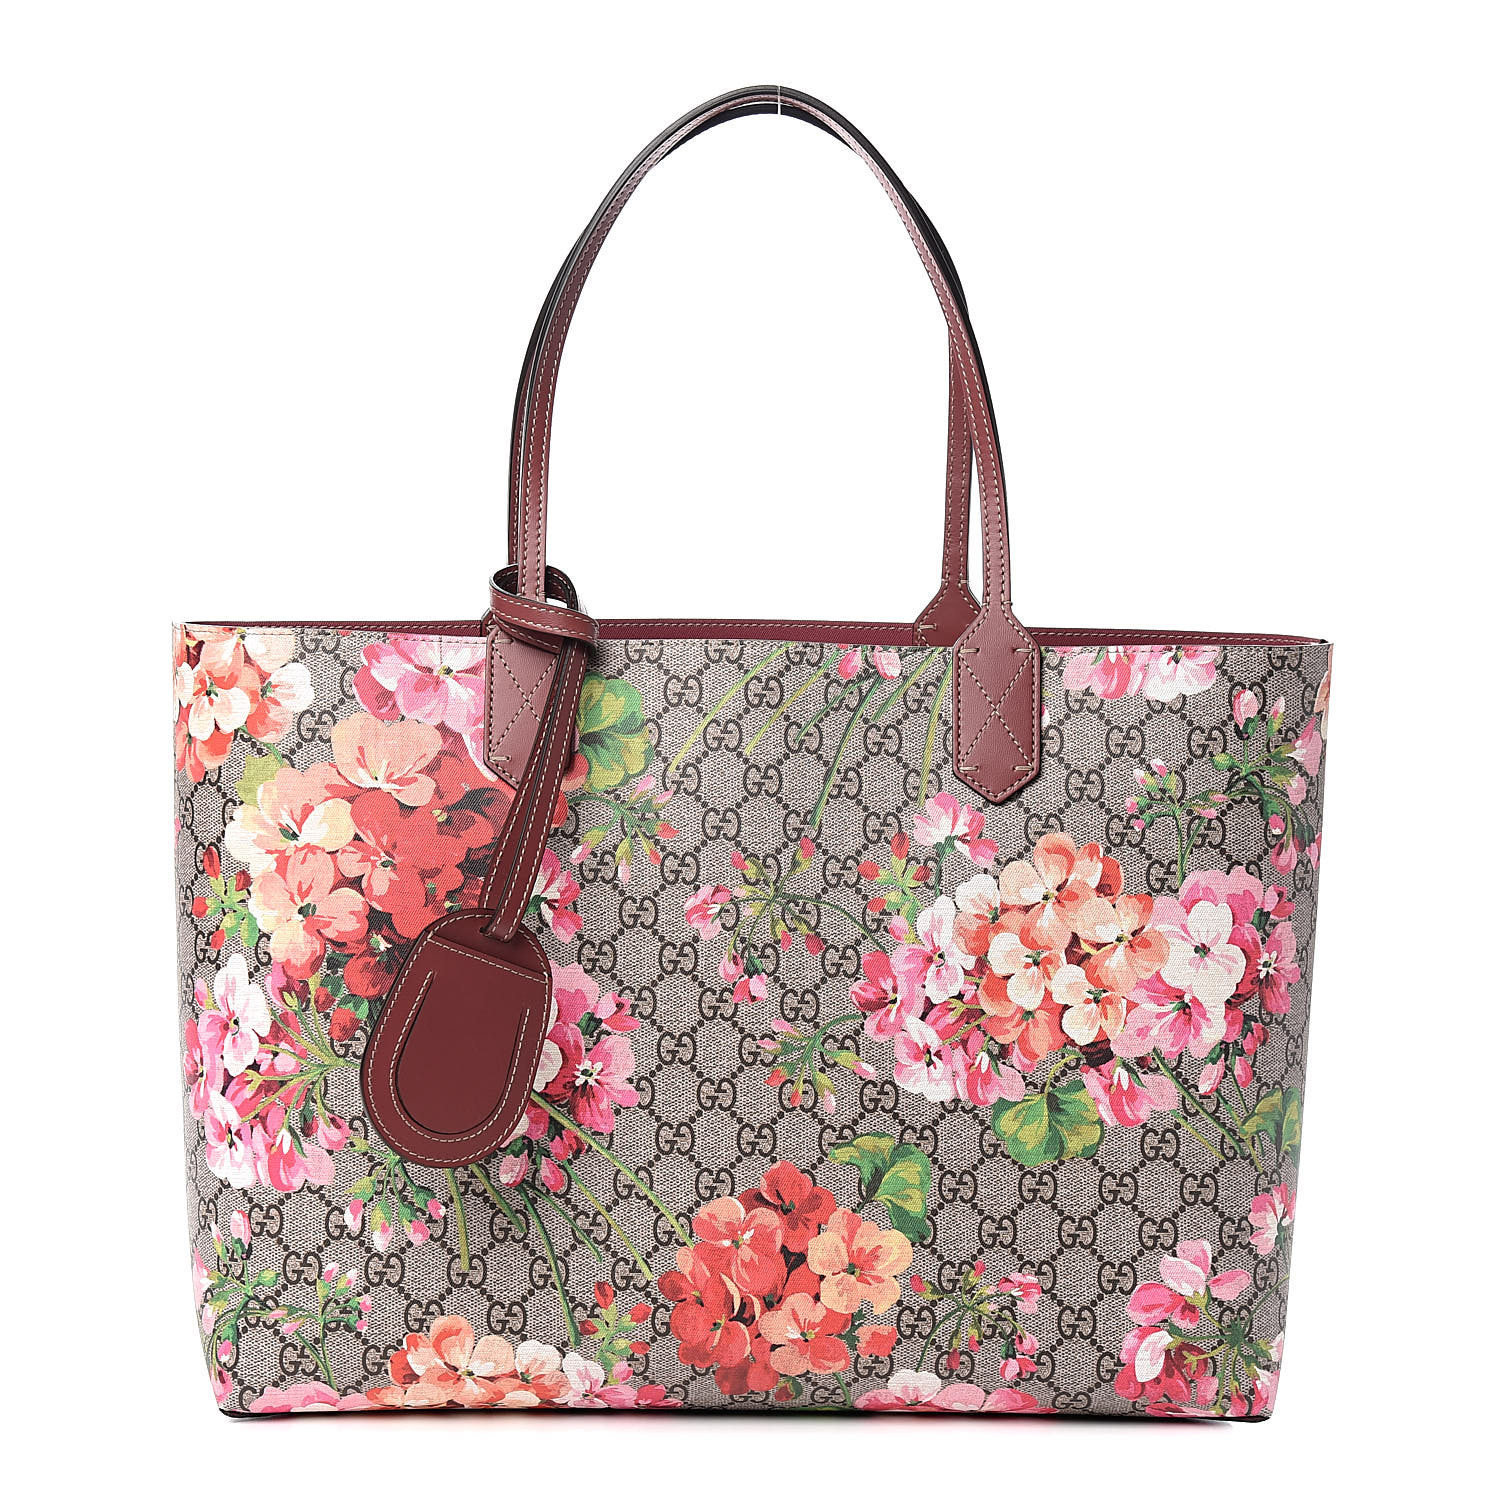 gucci purse floral pattern